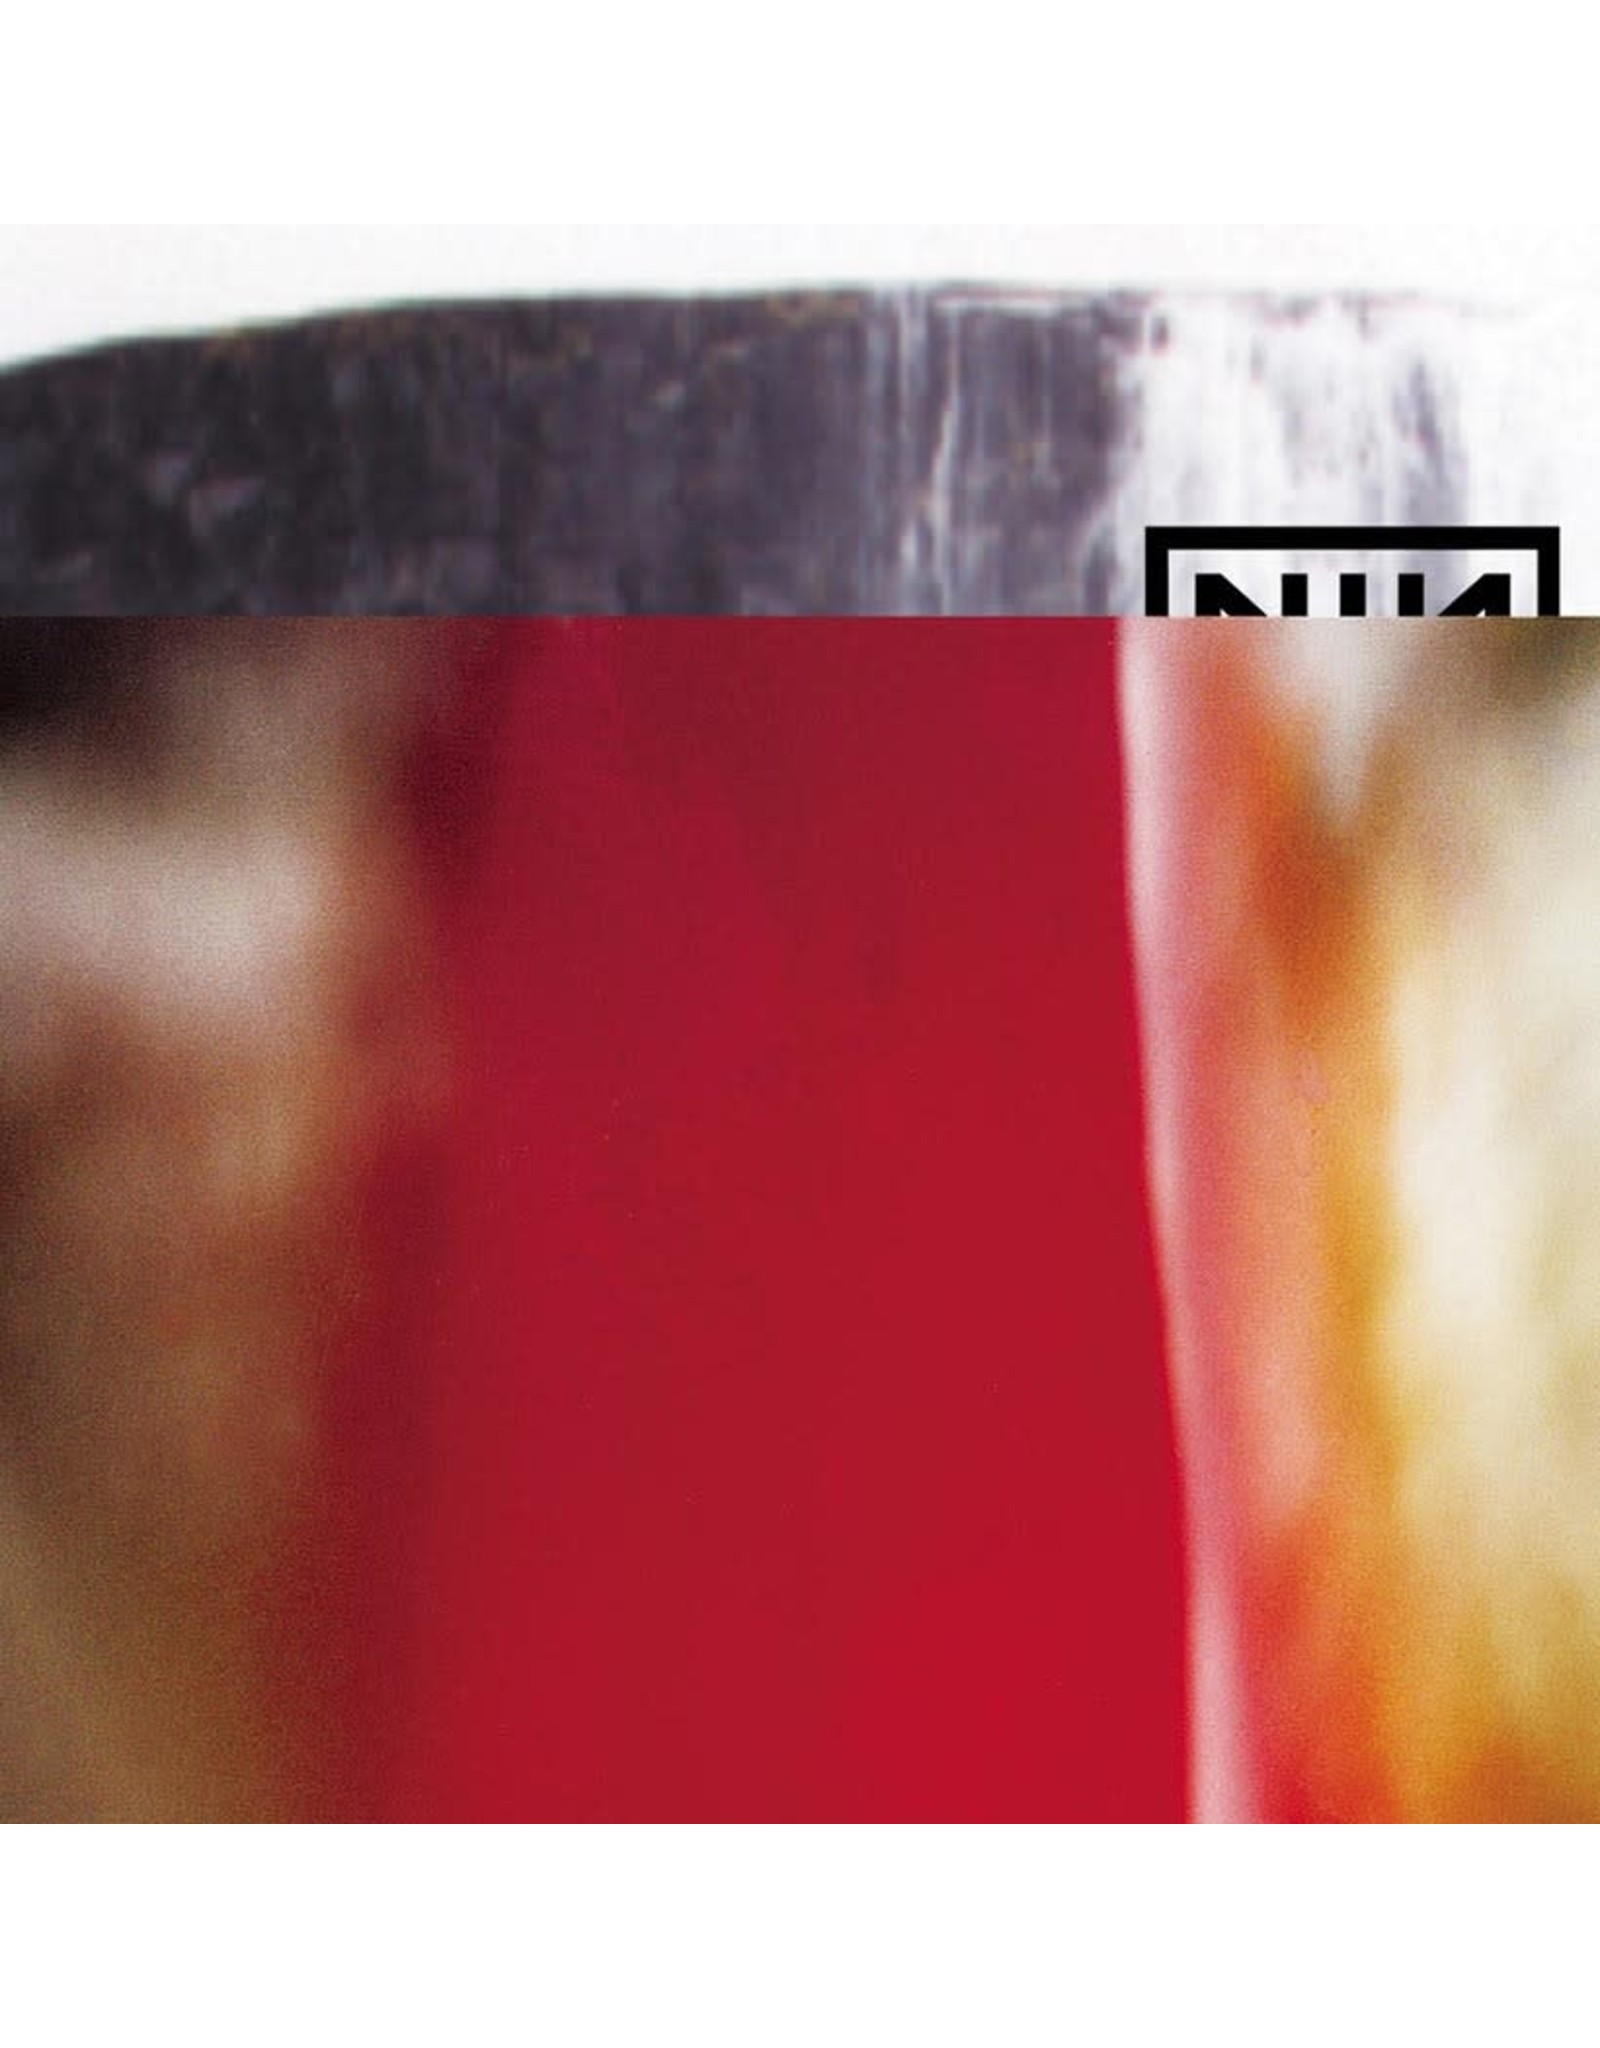 Nine Inch Nails - The Fragile (2017 Definitive Edition)